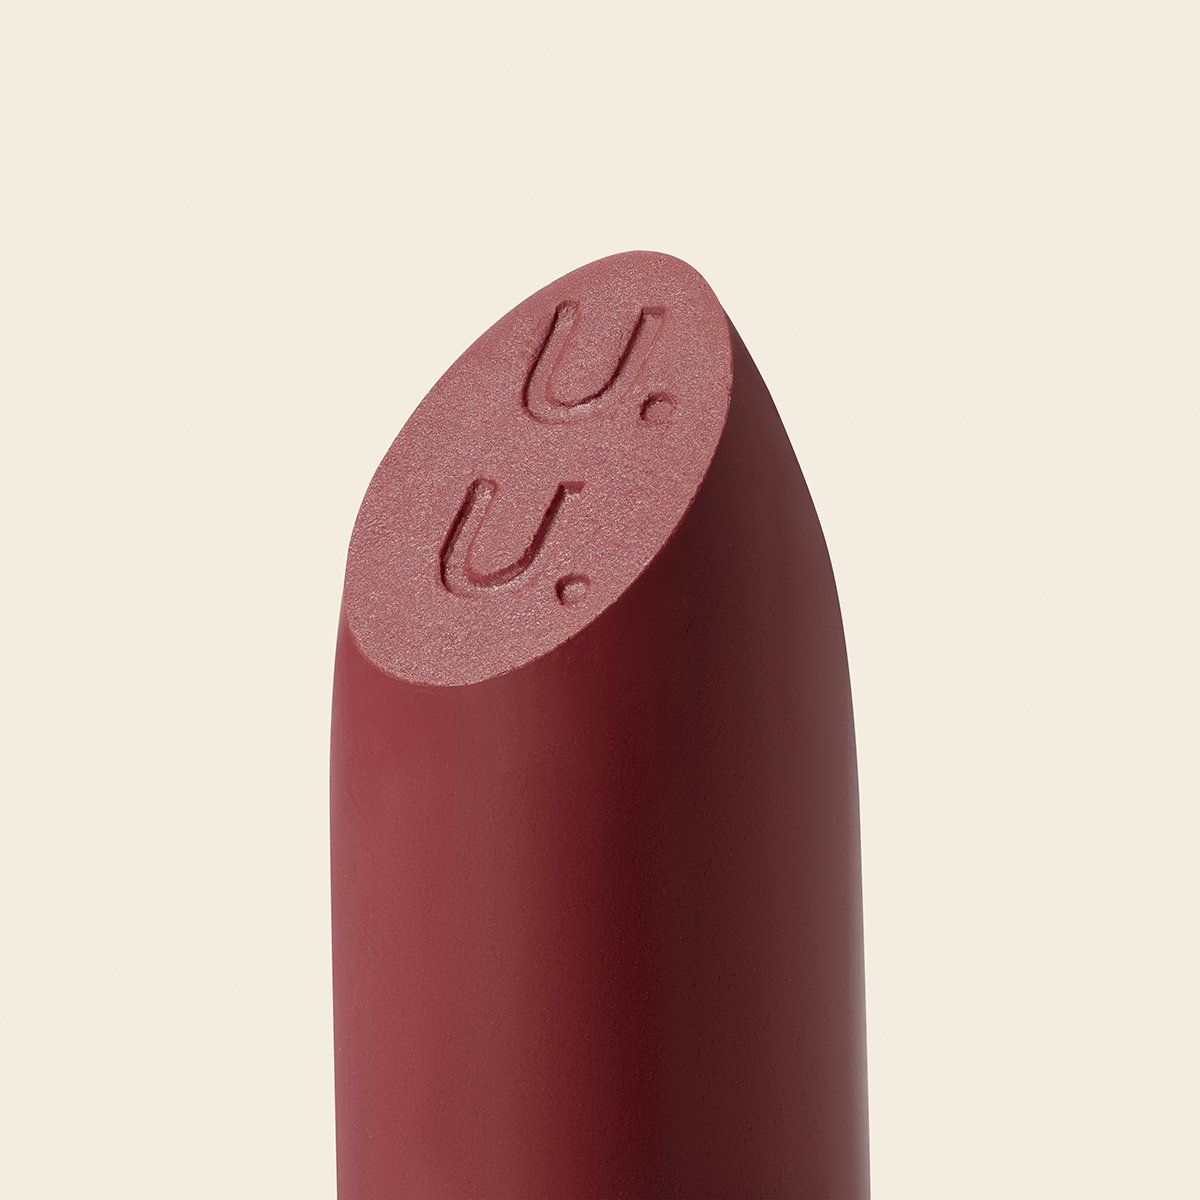 Uoga Uoga Nourishing Sheer Natural Lipstick, Candyberry 4 g